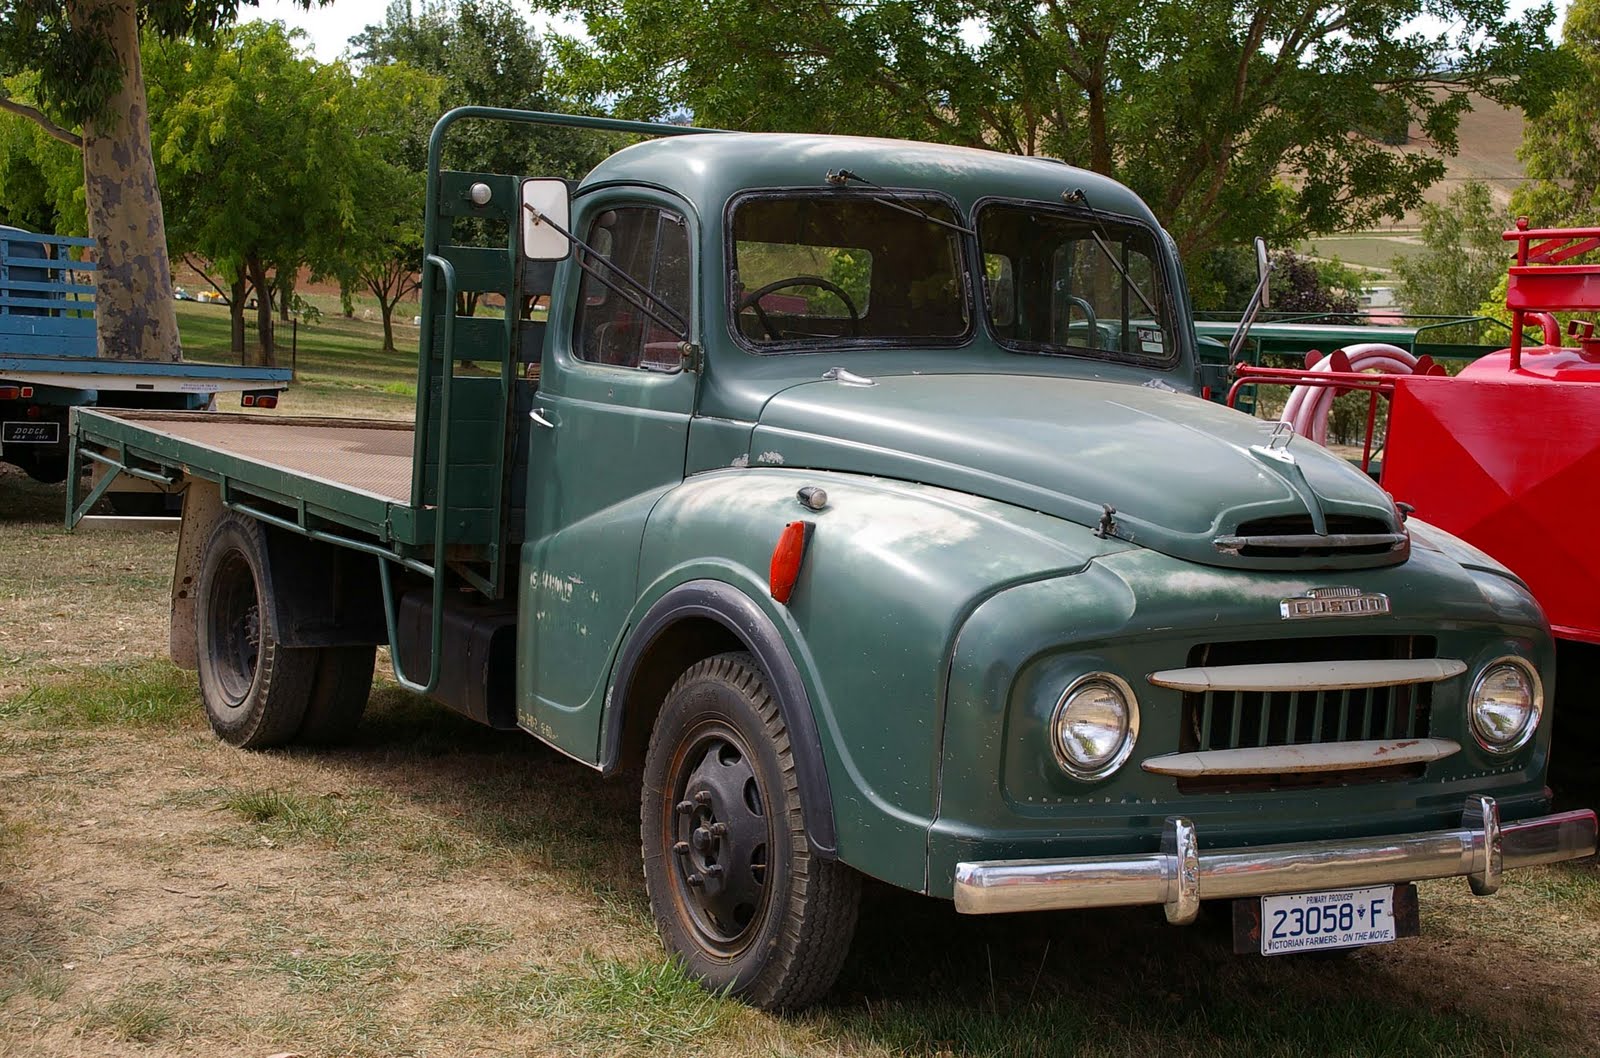 sugarpetite: Historic trucks blogspot comes across cool old trucks in Australia